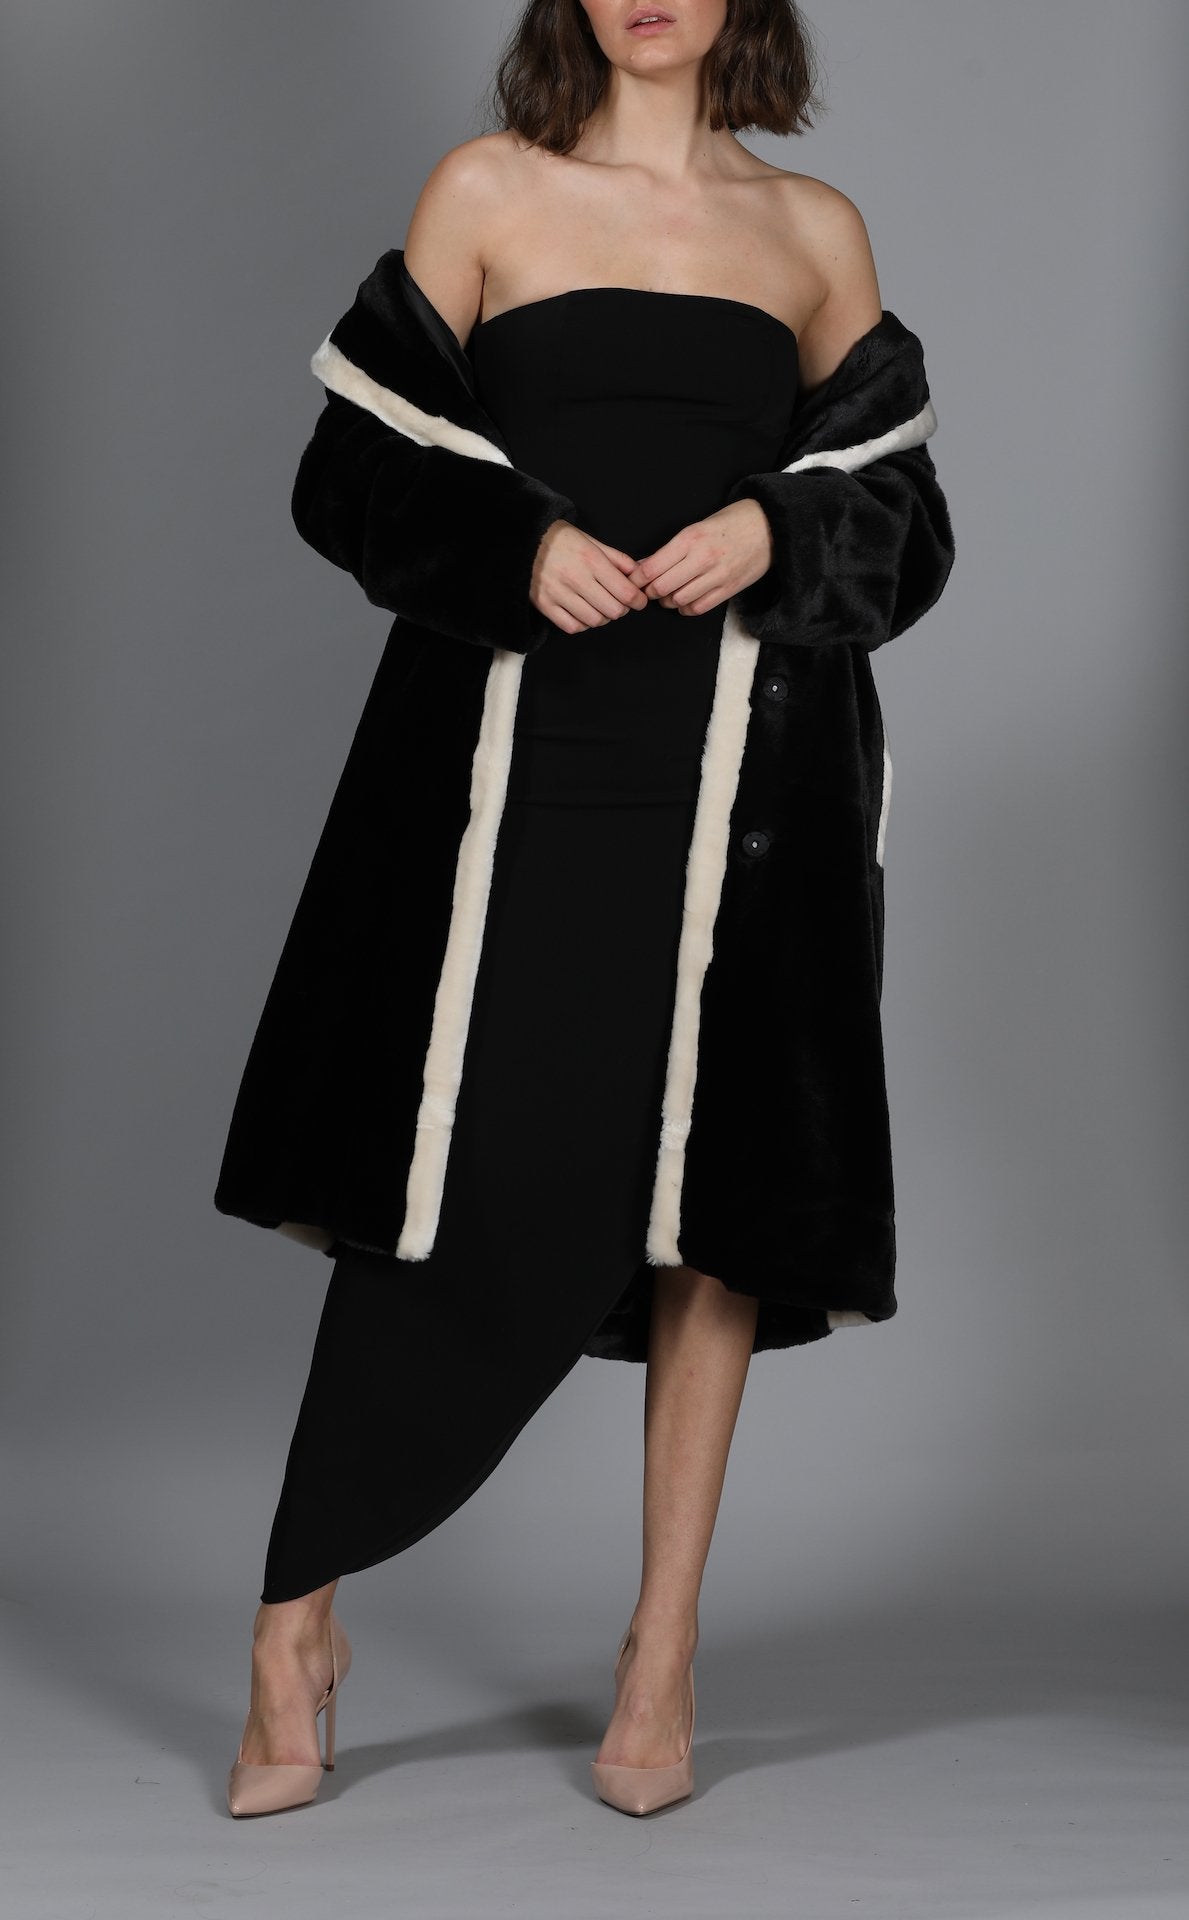 Marianne Two Tone Faux Fur Coat